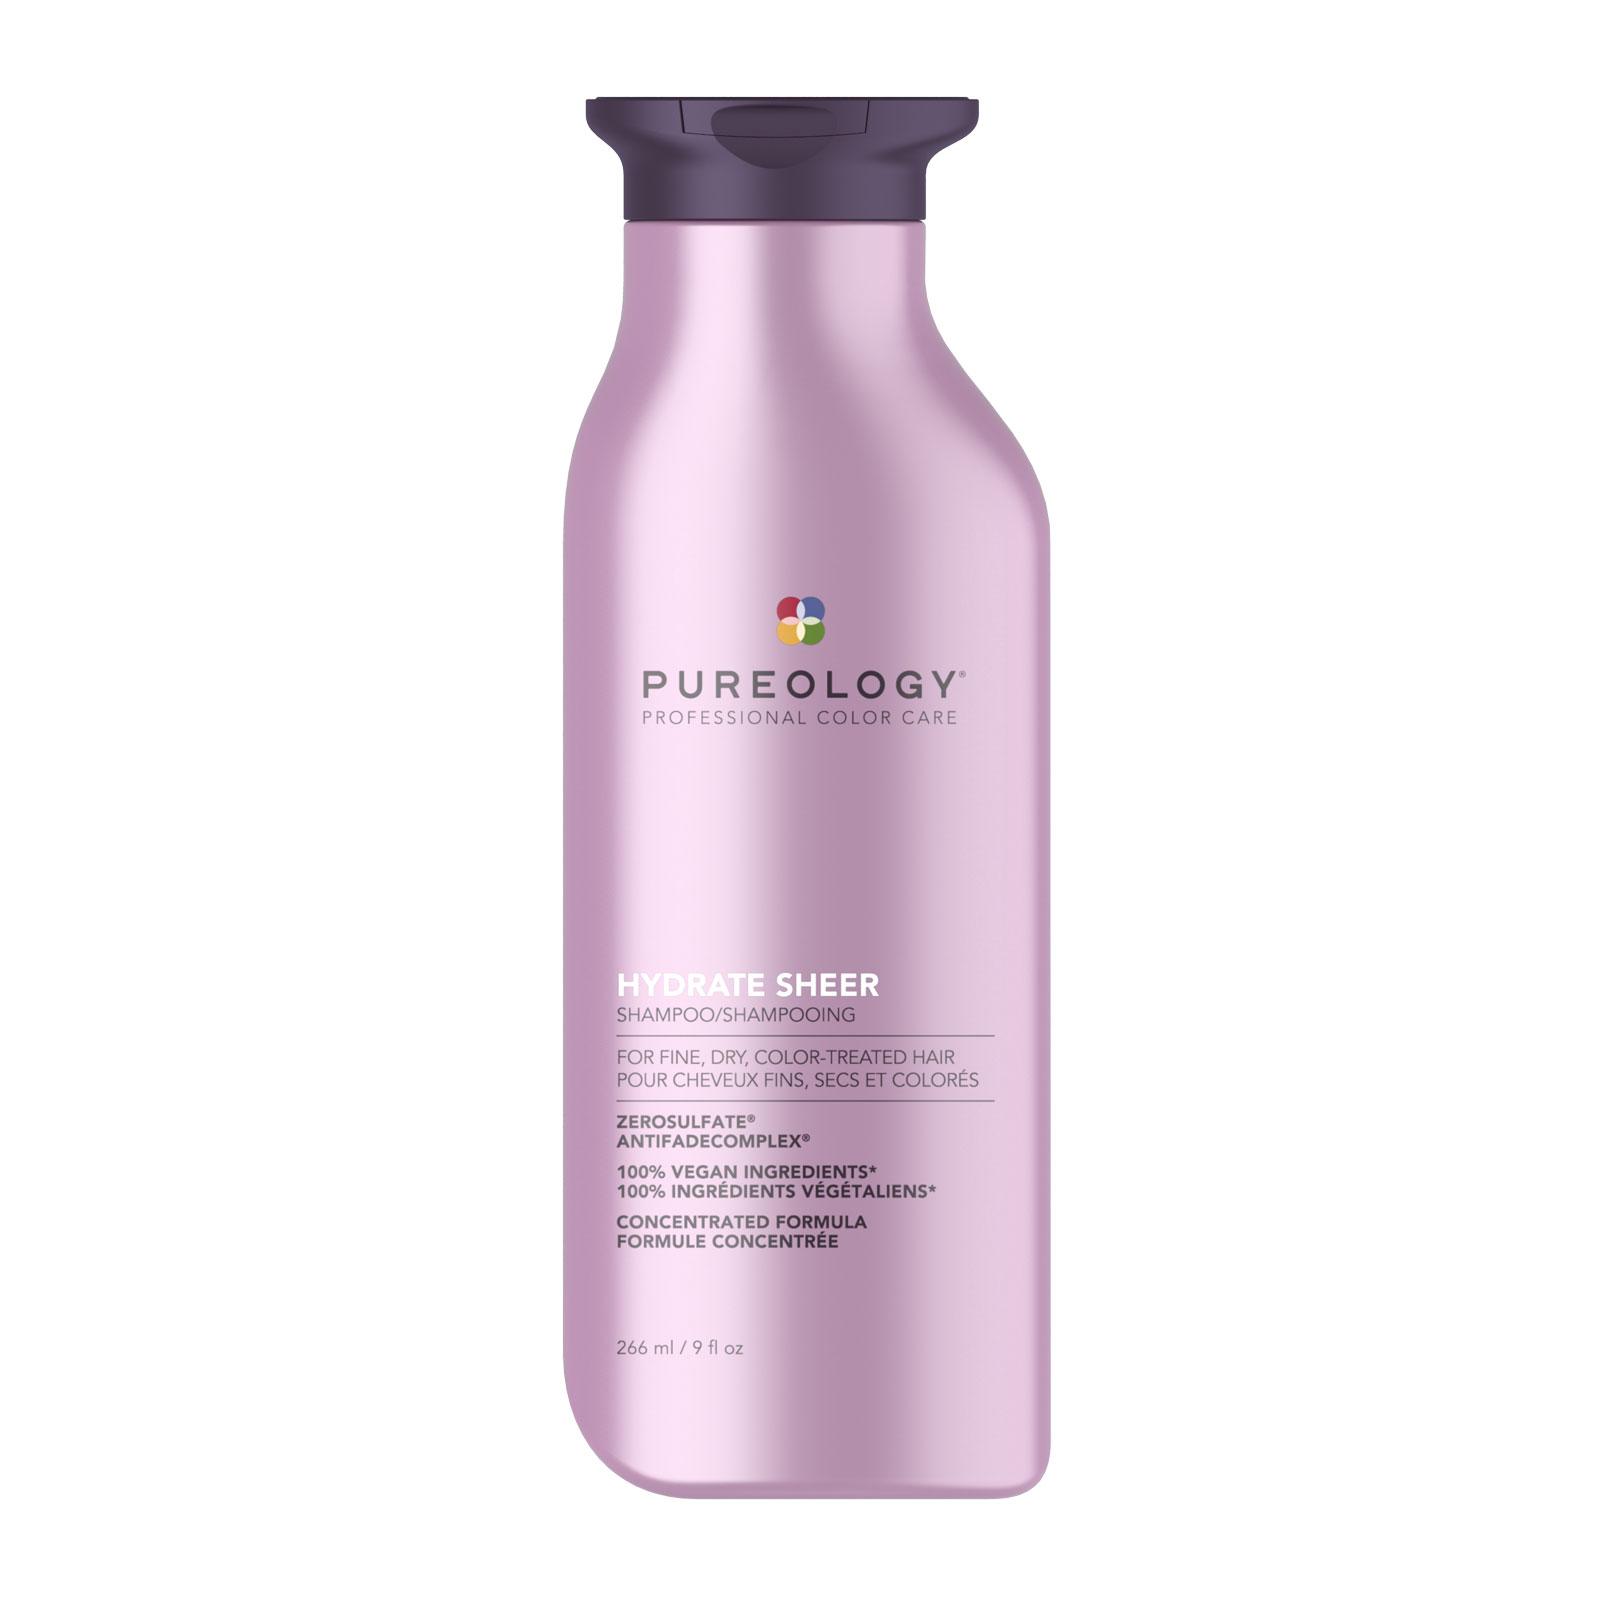 Pureology Hydrate Sheer Shampoo 266ml | FEELUNIQUE